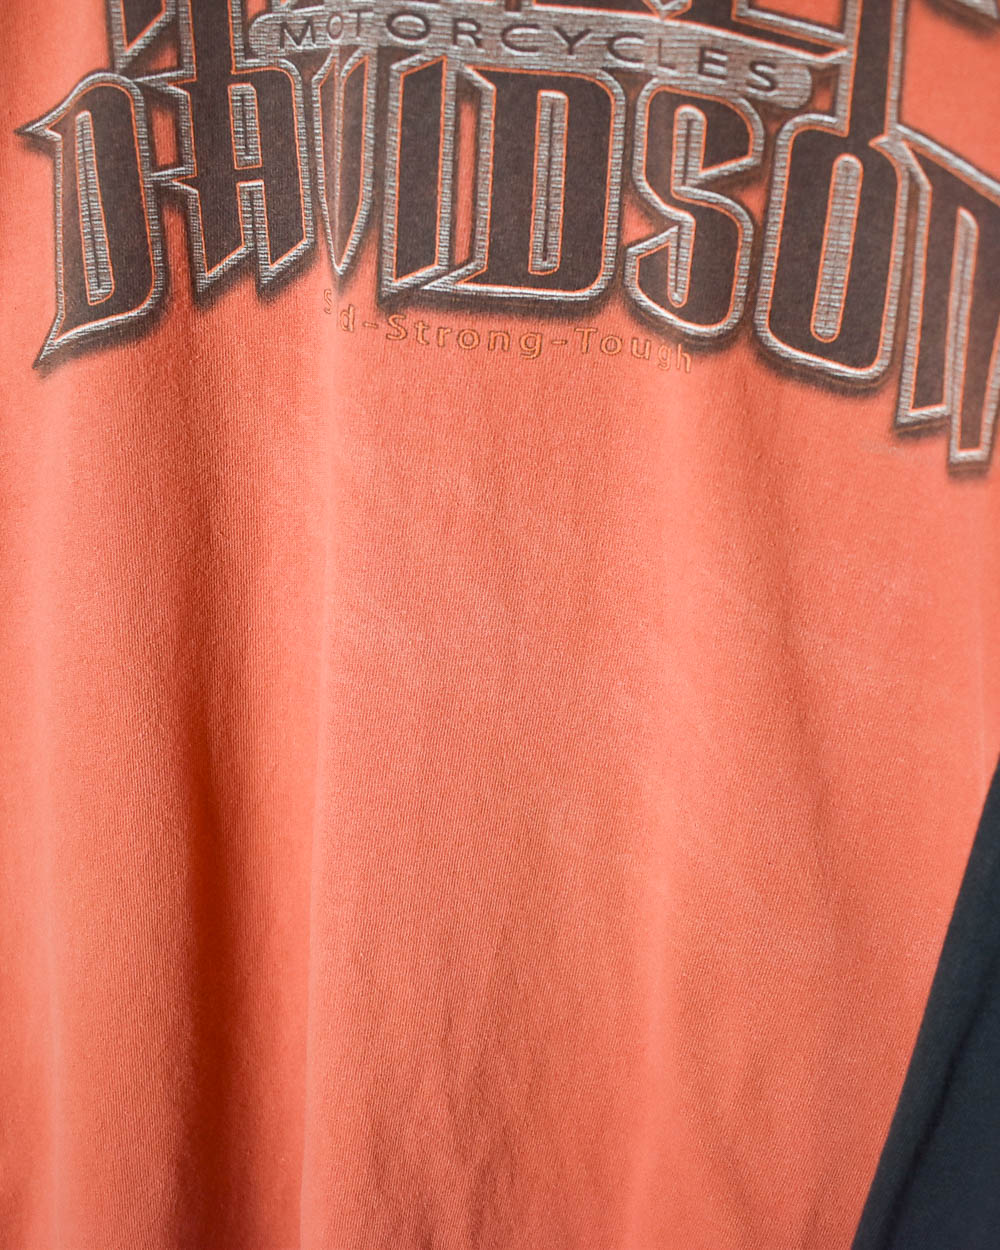 Orange Harley Davidson Motorcycles Graphic Long Sleeved T-Shirt - Medium